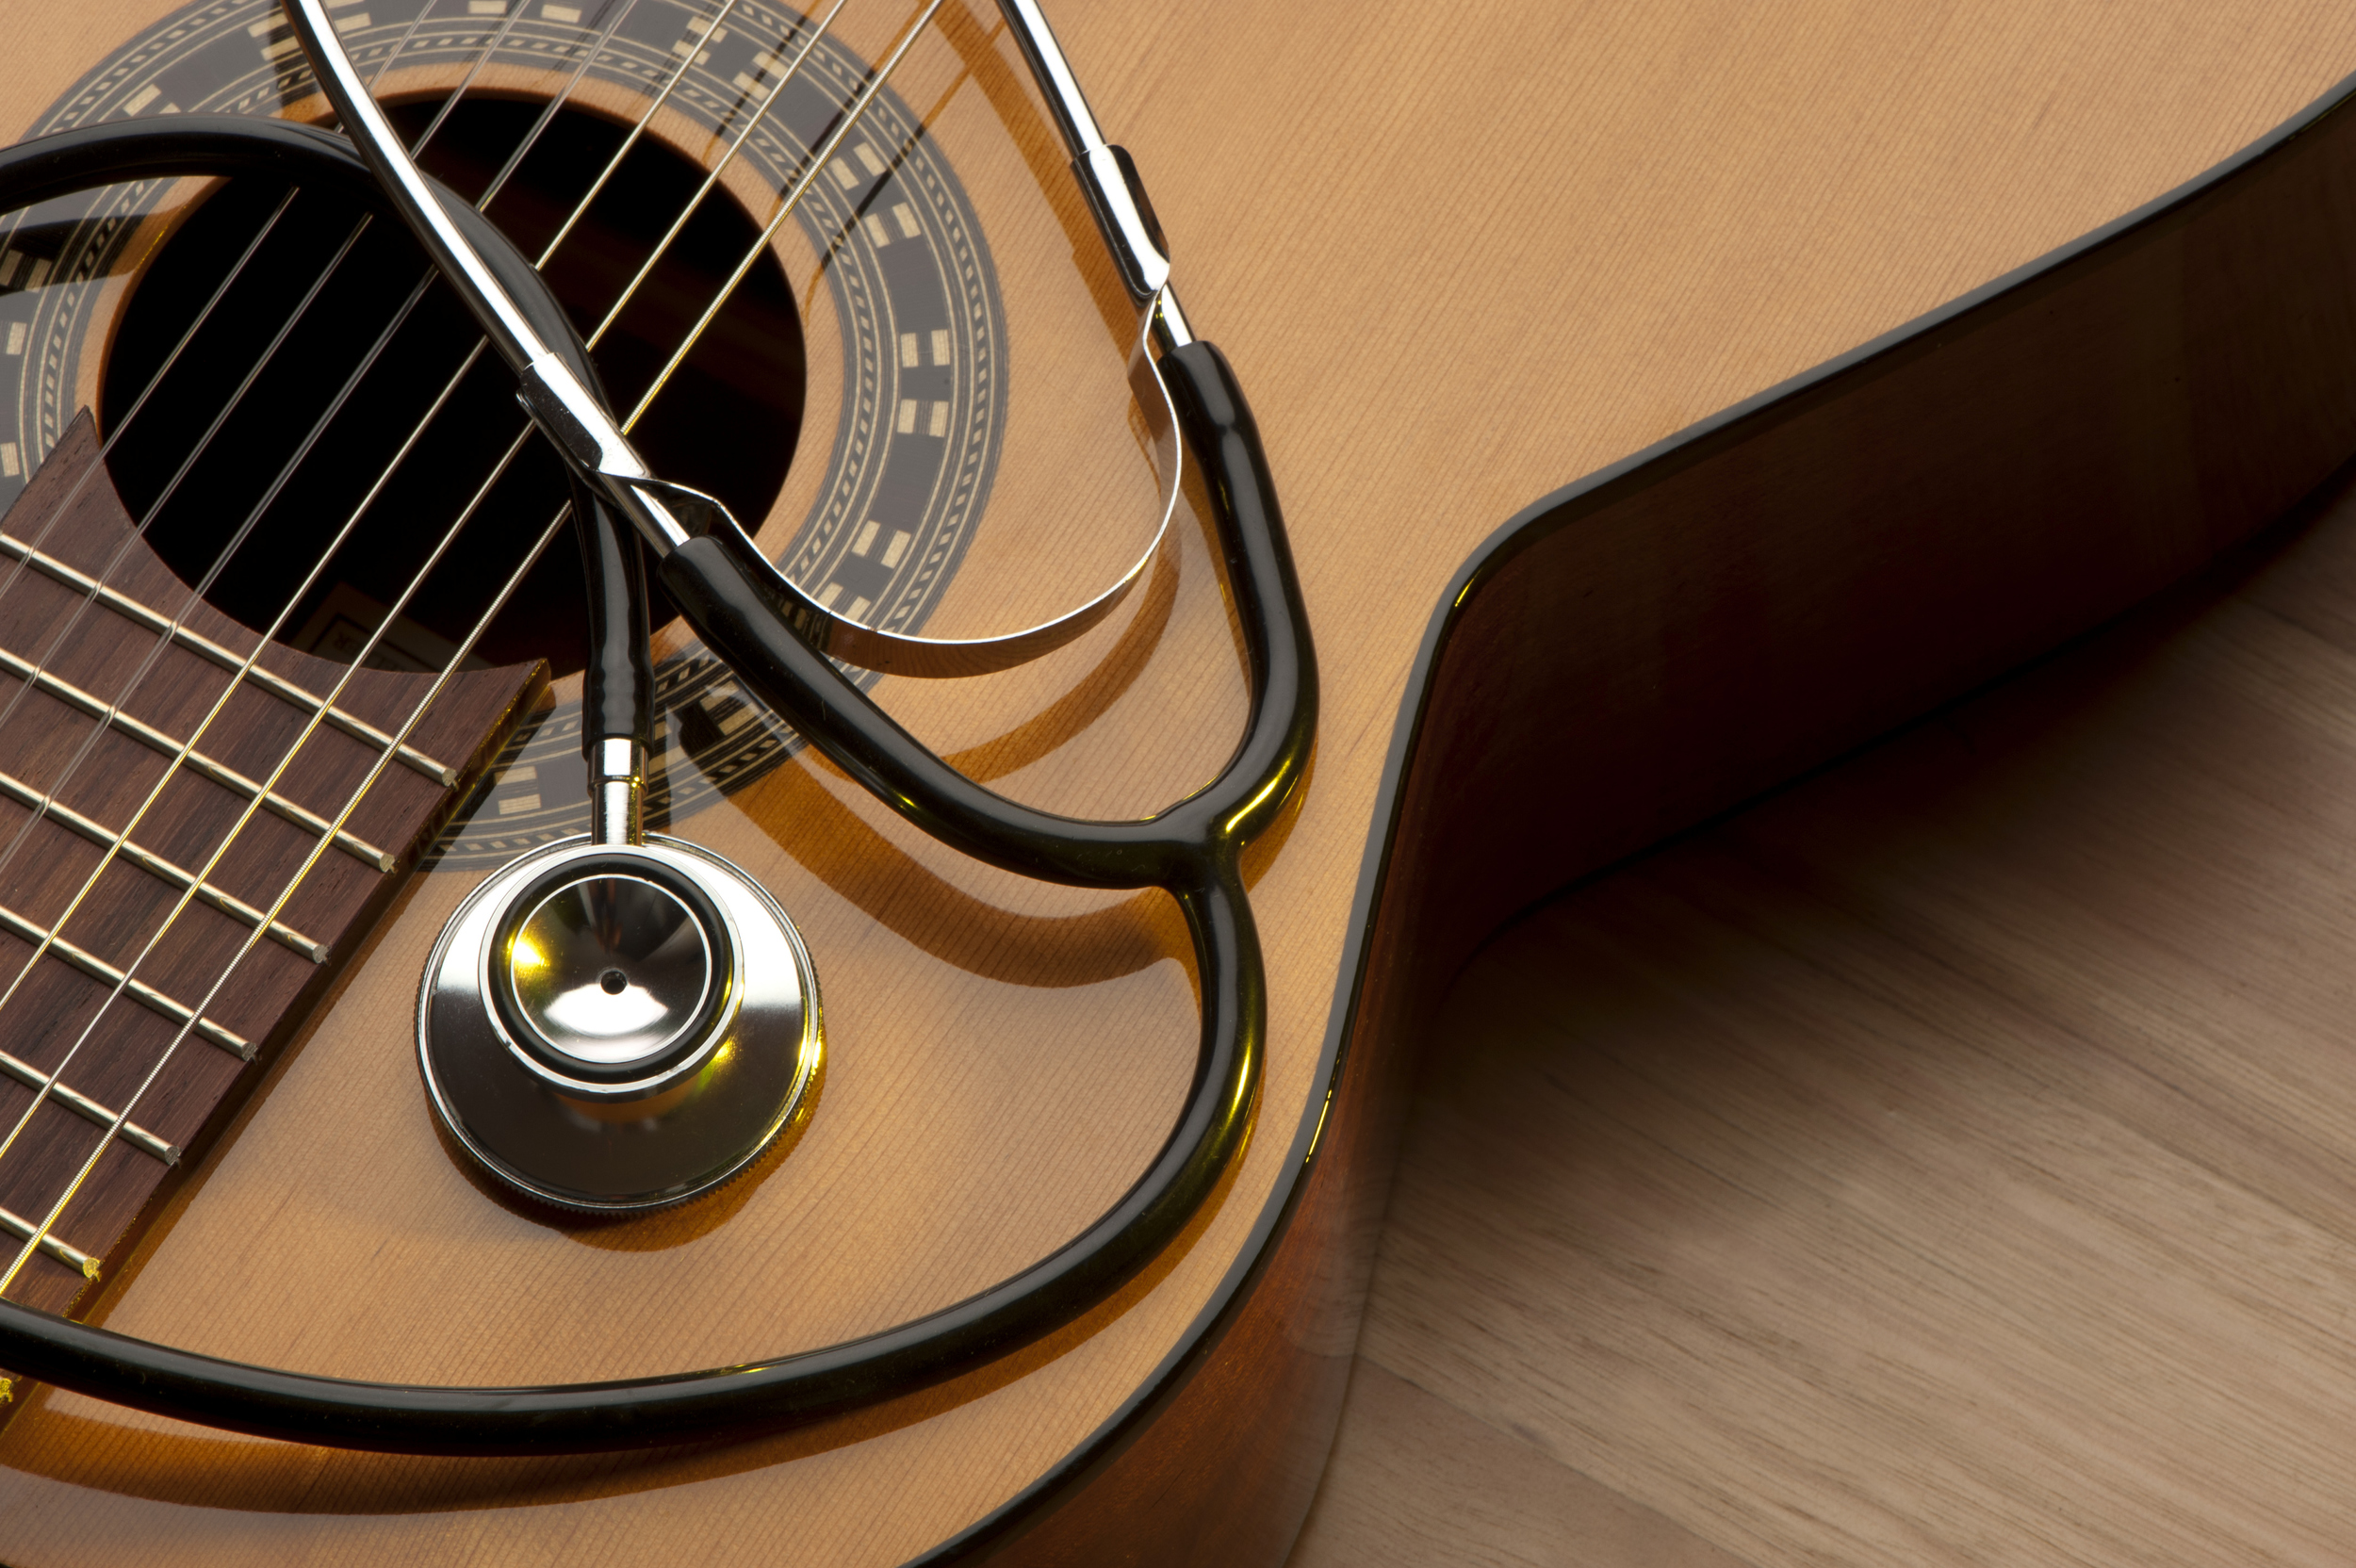   Let us help diagnose your repair needs    Guitar   Electronics  